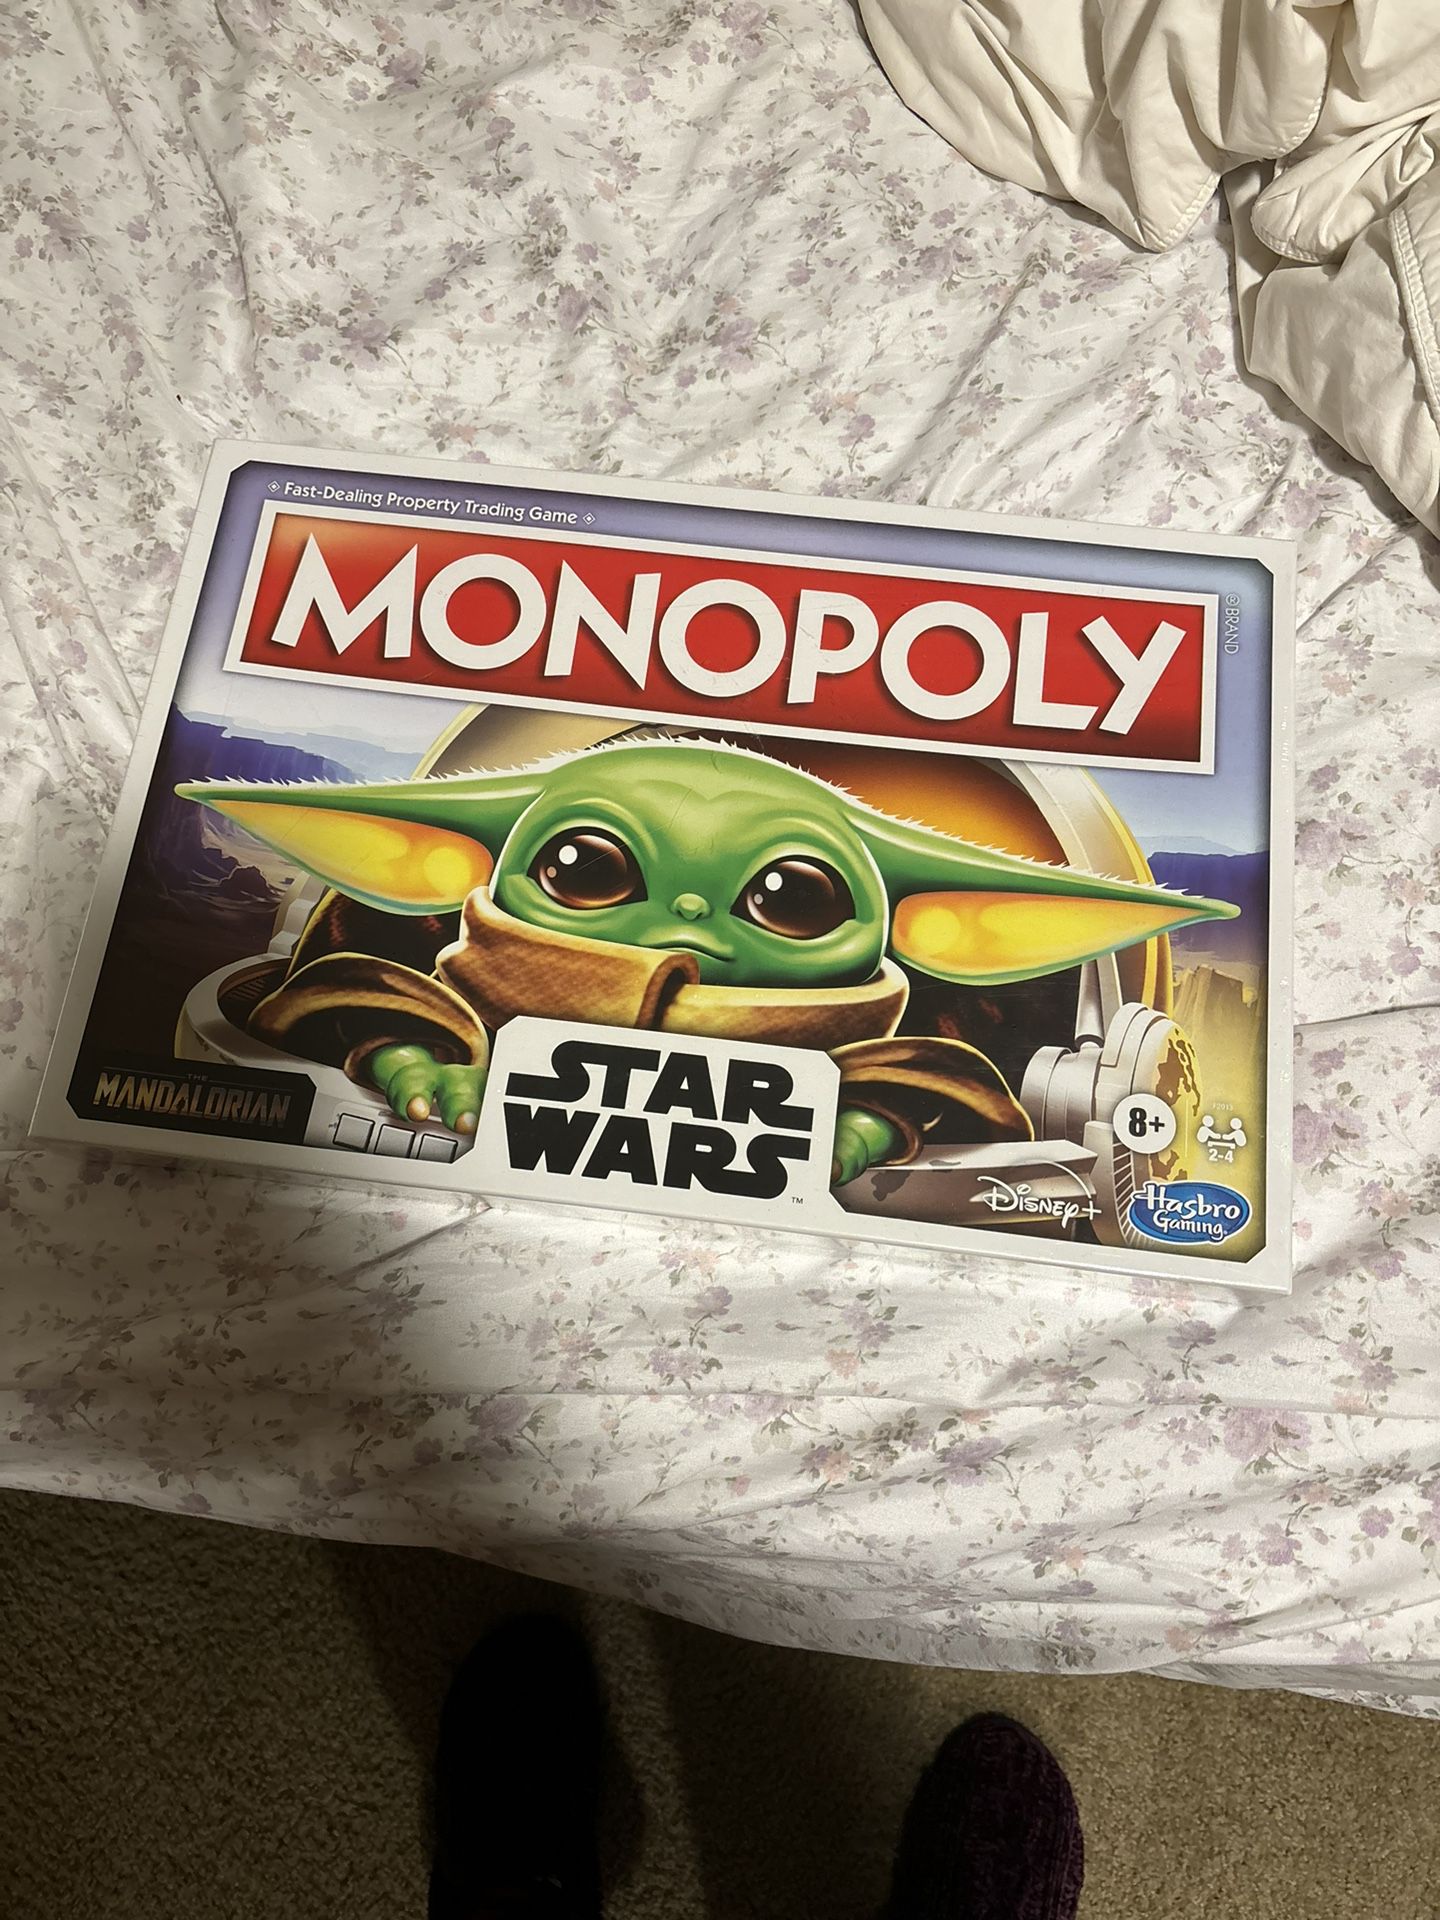 Sealed, Star Wars Mandalorian monopoly game board